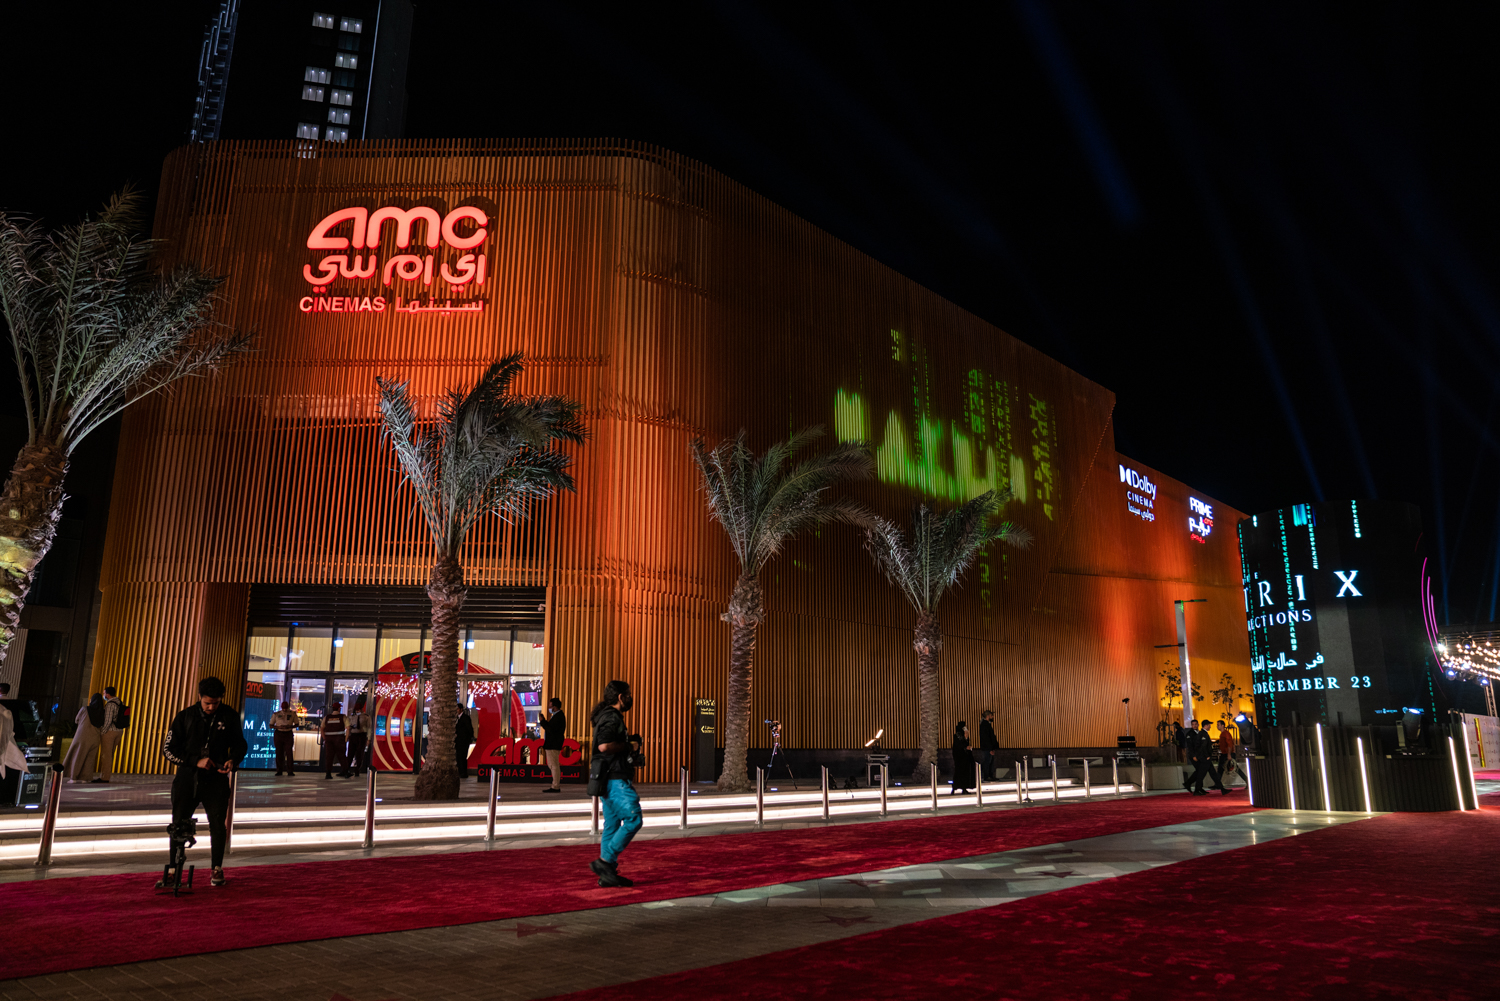 Saudi Arabia: AMC Cinemas Opens Ajdan Walk Cinema as its First Location in Al-Khobar